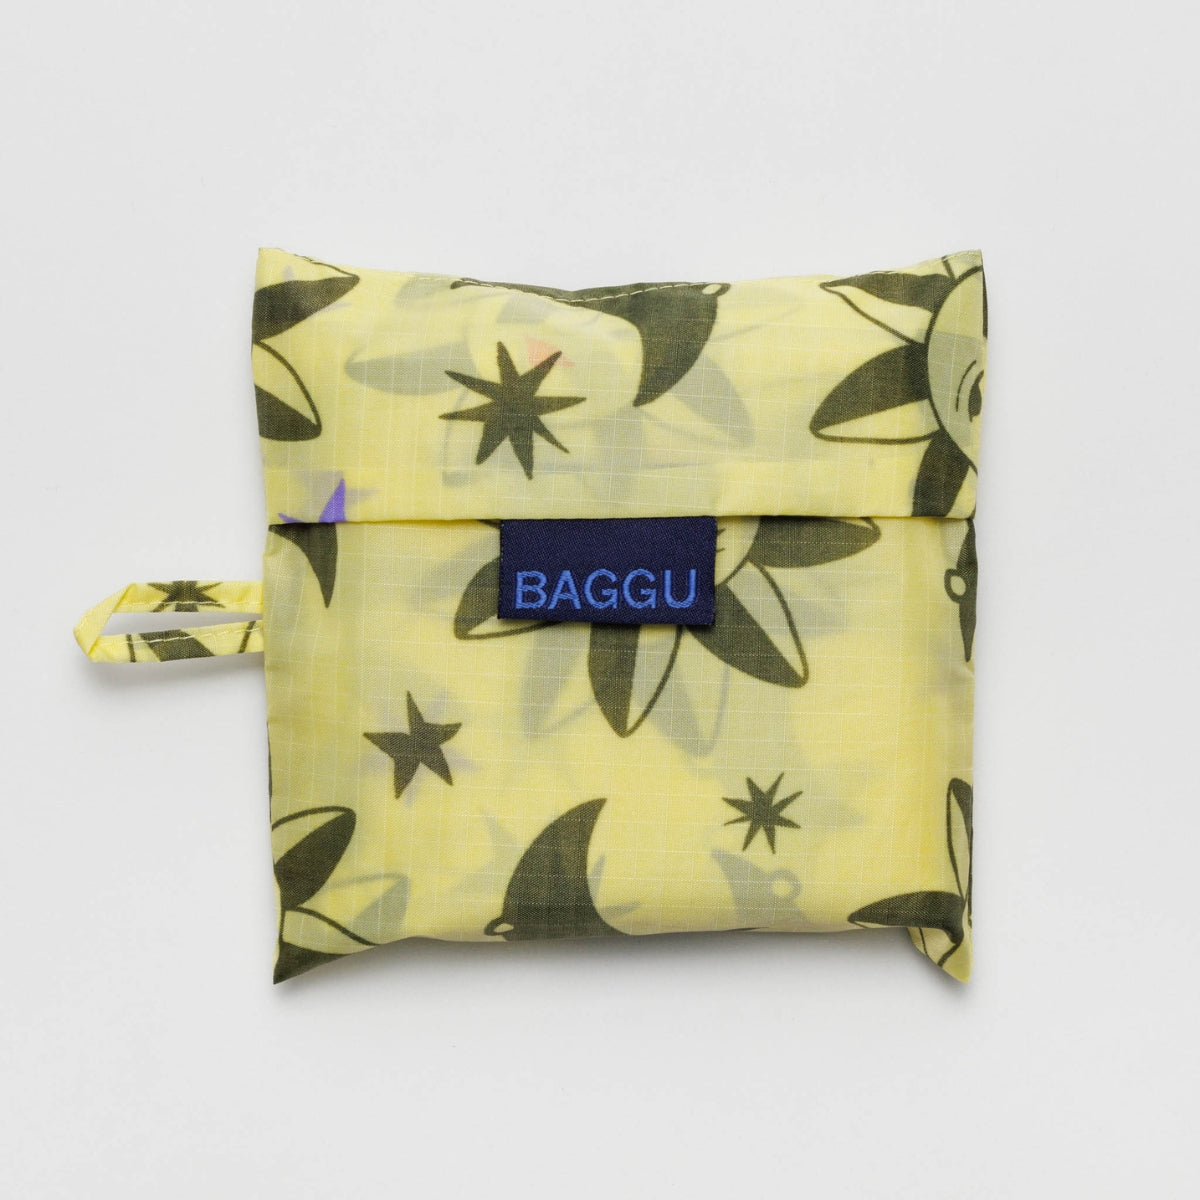 Baggu Standard Bag in Sun and Moon Charms